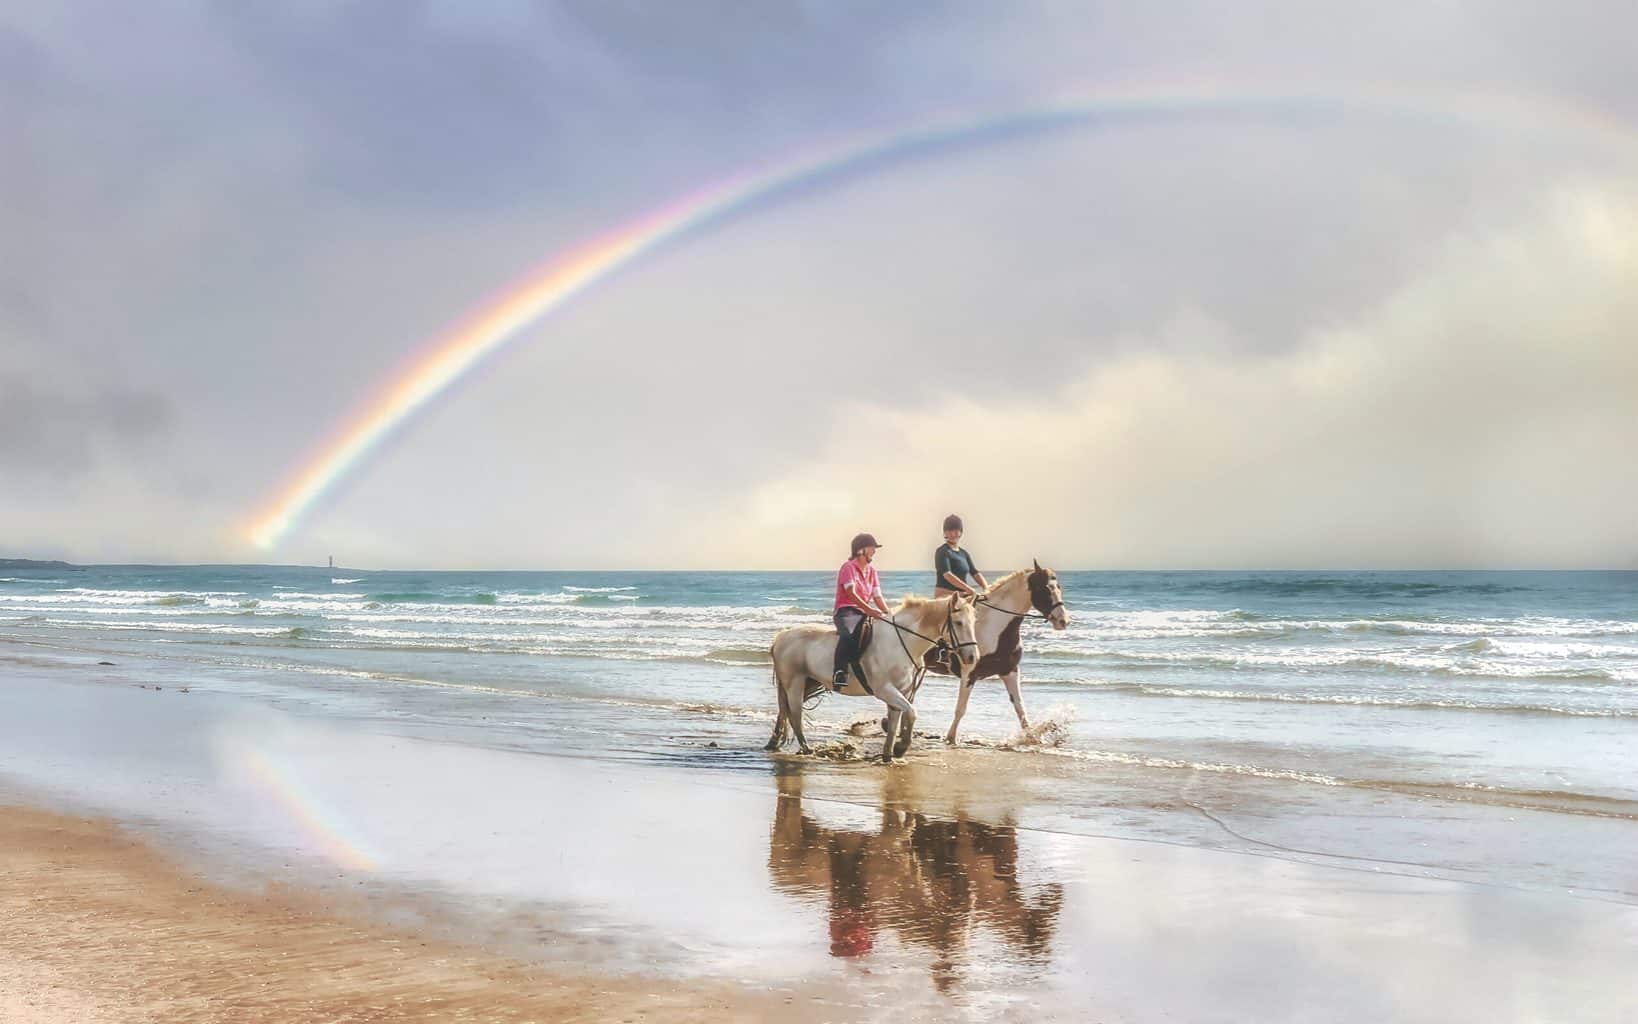 Equestrians on Tyrella Beach: riding under a rainbow (Sep., 2020).